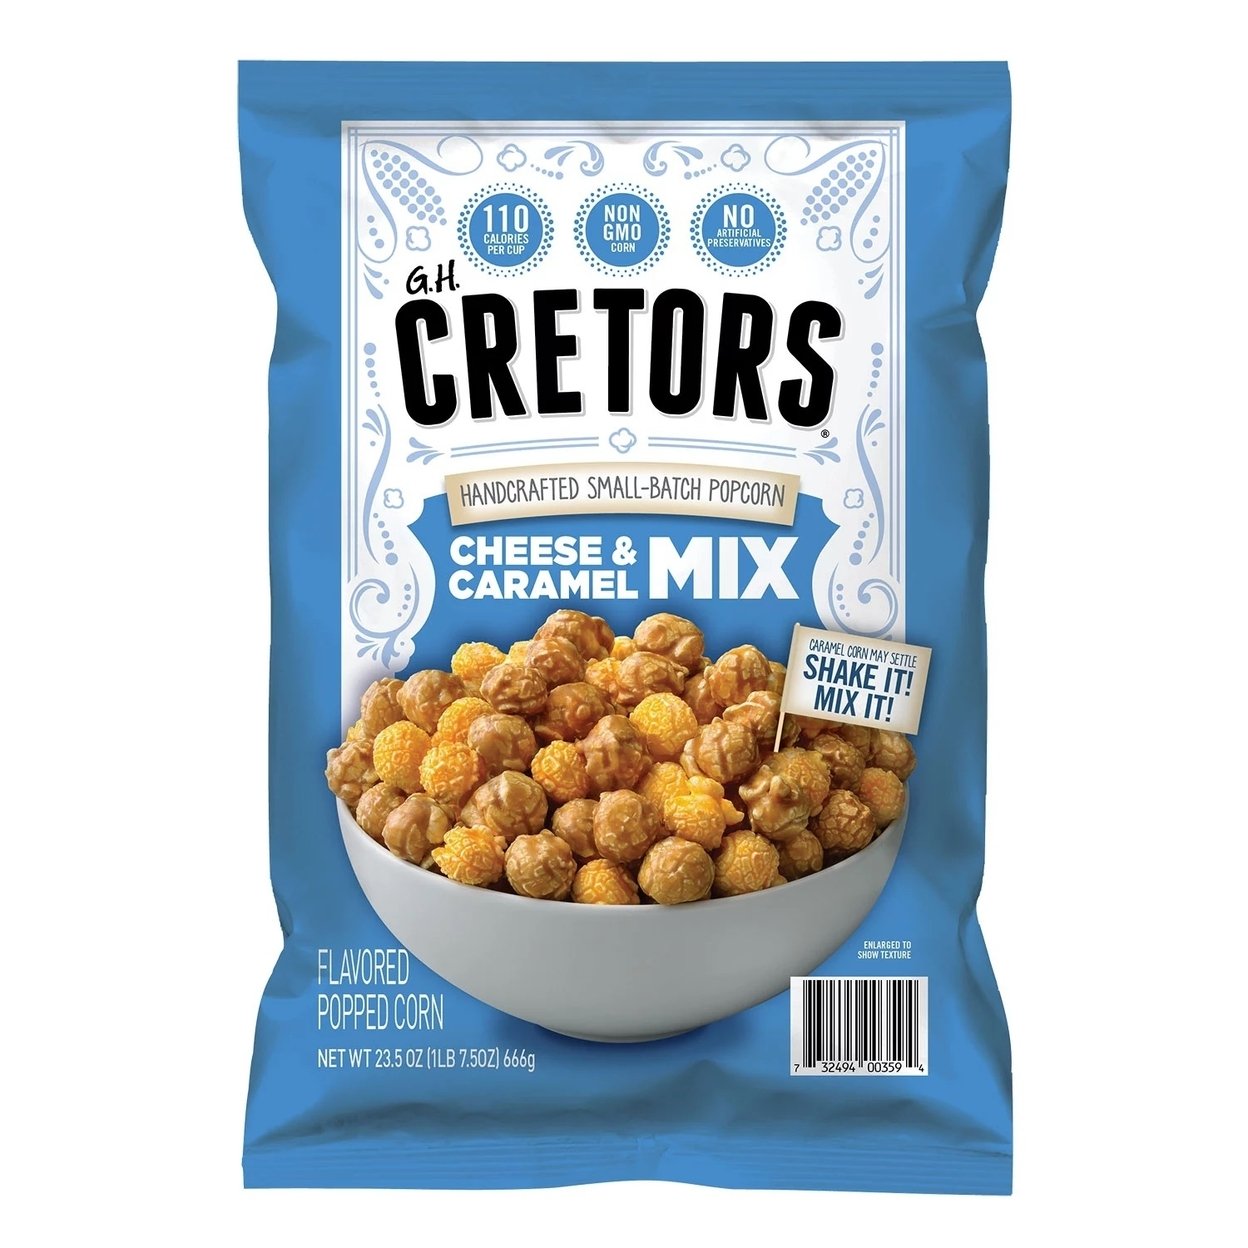 G.H. Cretors Cheese & Caramel Flavored Popcorn Mix (23.5 Ounce)